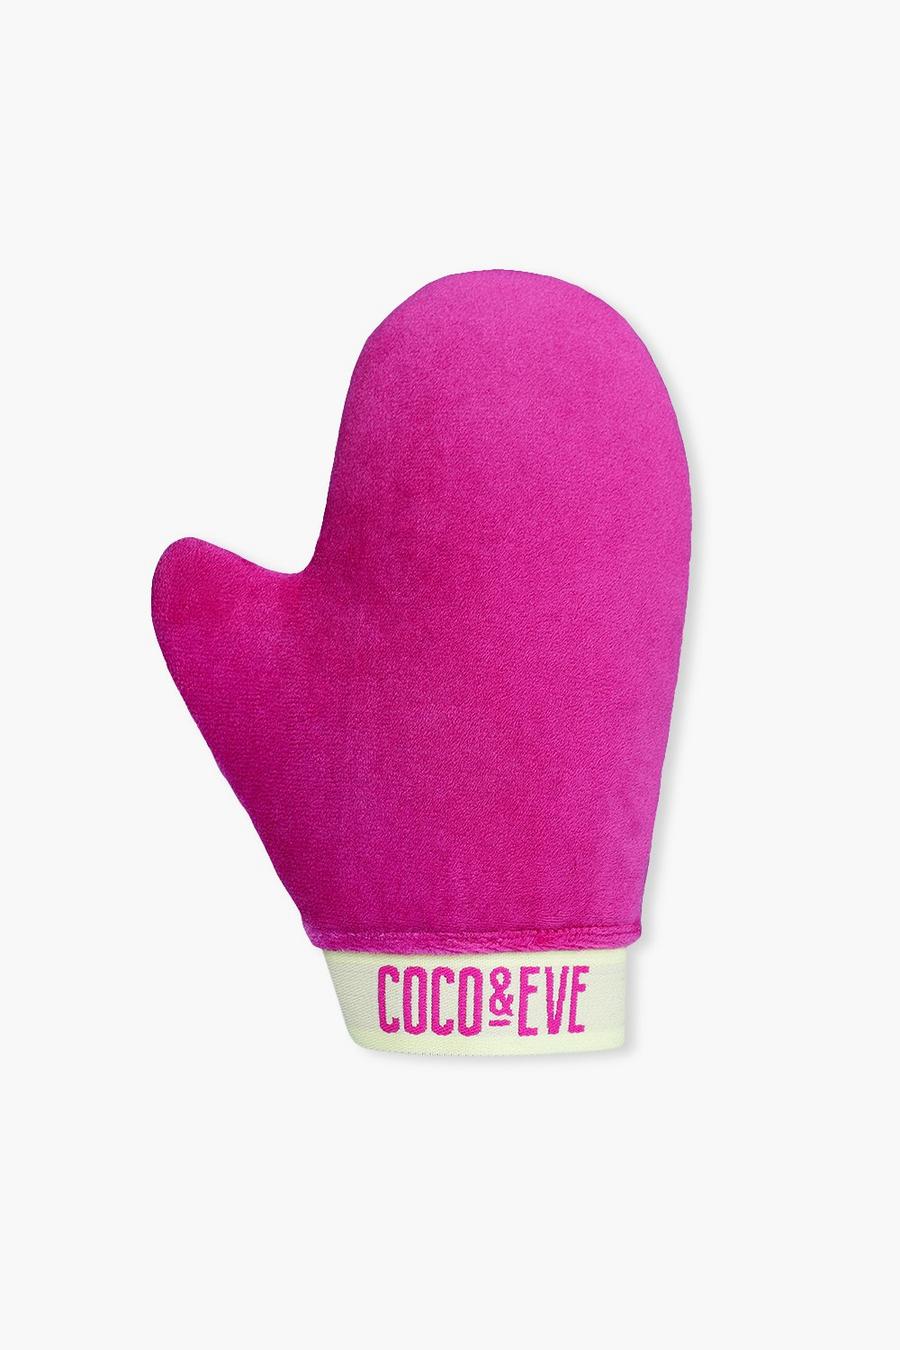 Coco & Eve - Gant applicateur d'autobronzant Sunny Honey, Pink rose